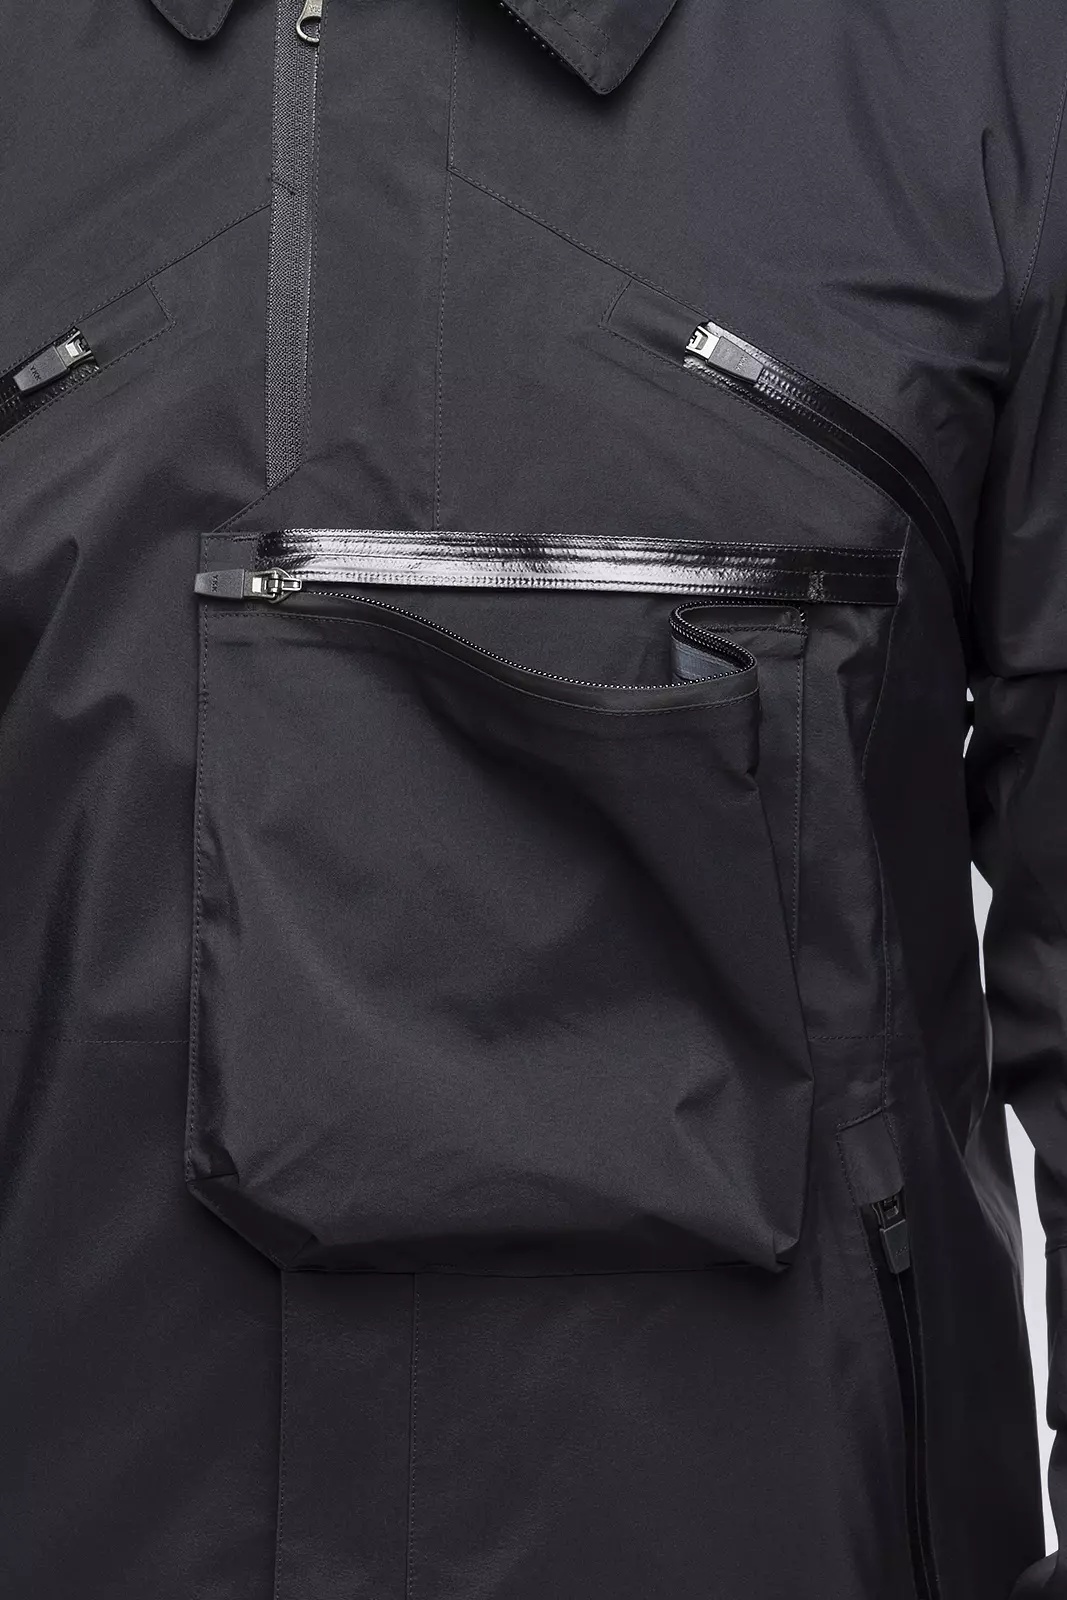 J1A-GTKR-BKS KR EX 3L Gore-Tex® Pro Interops Jacket Black with size 5 WR zippers in gloss black - 24